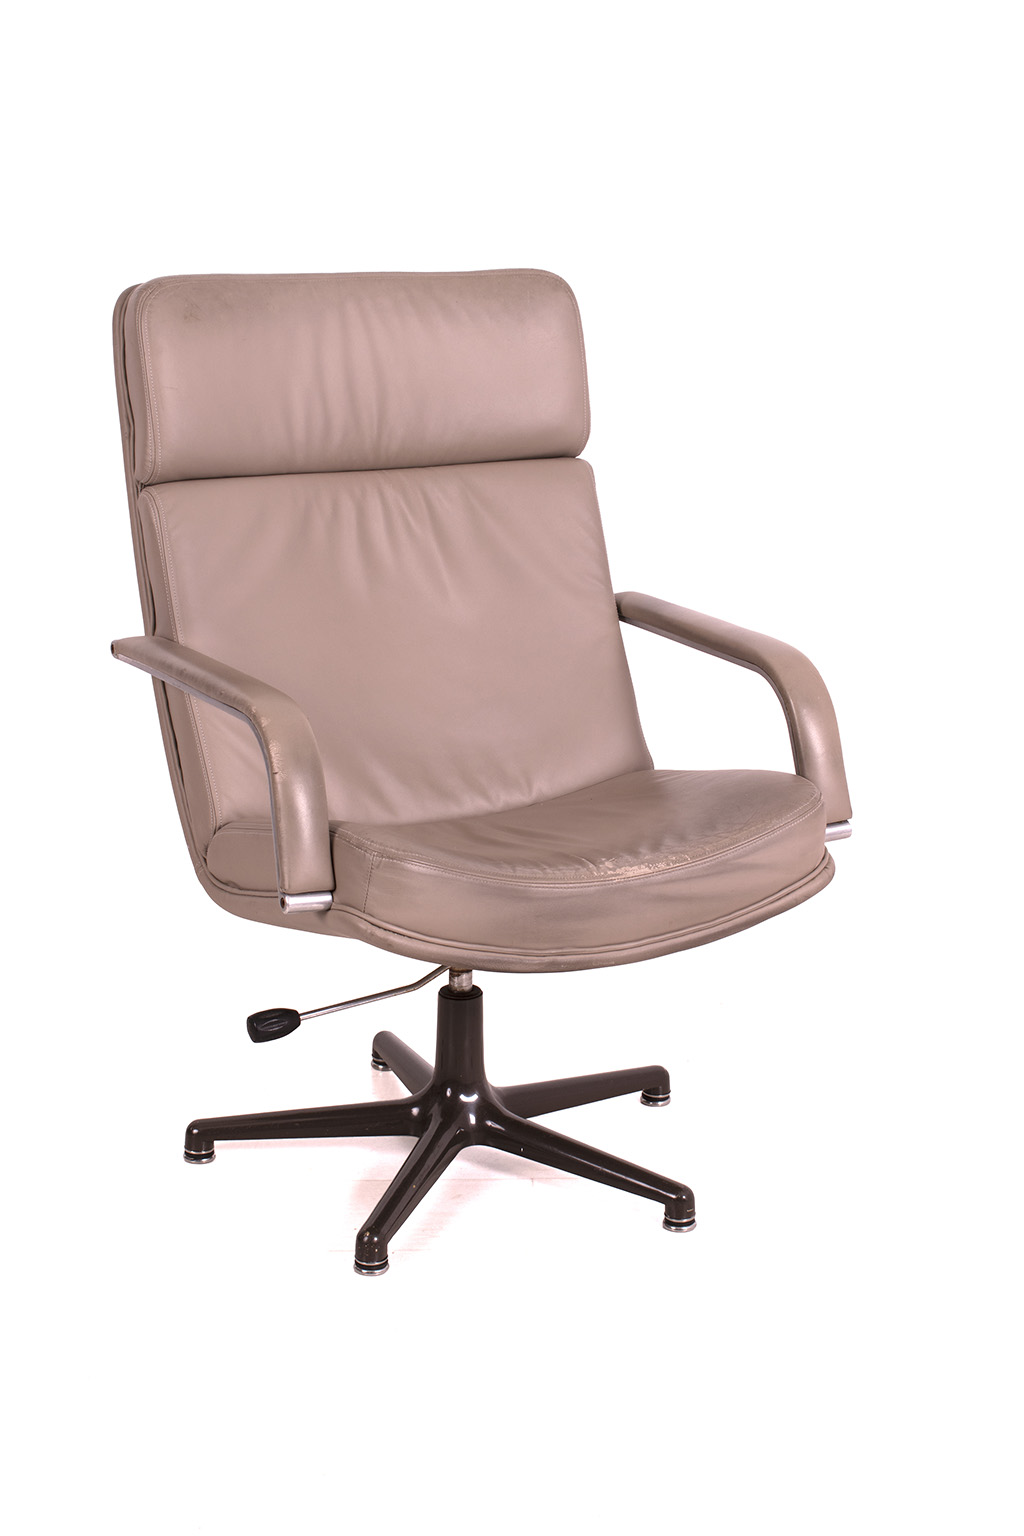 Comfortable F141 Artifort arm chair